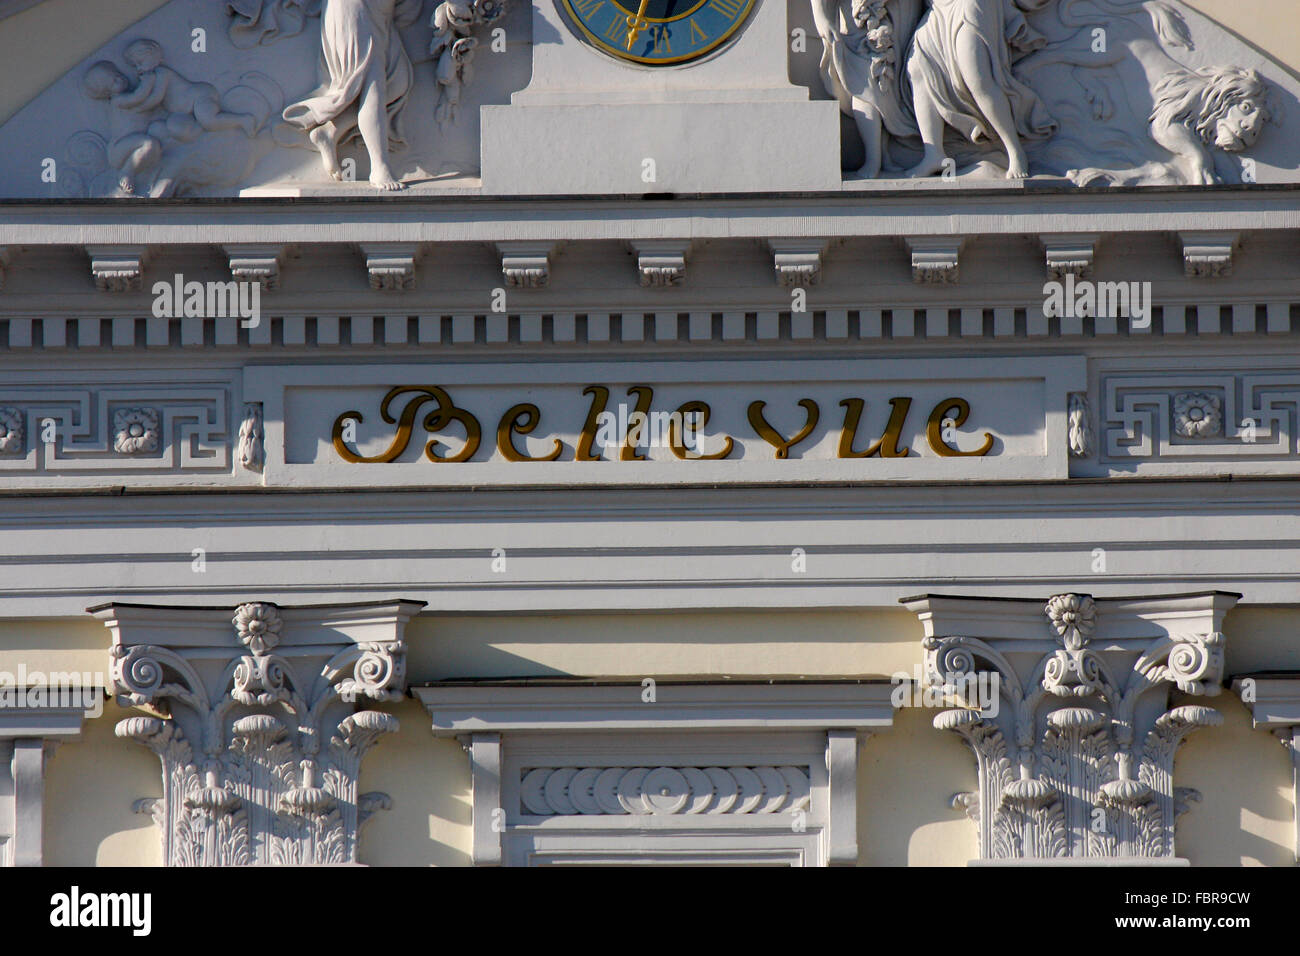 das Schloss Bellevue, Amtssitz des deutschen Bundespraesidenten, Berlin-Tiergarten. Stock Photo